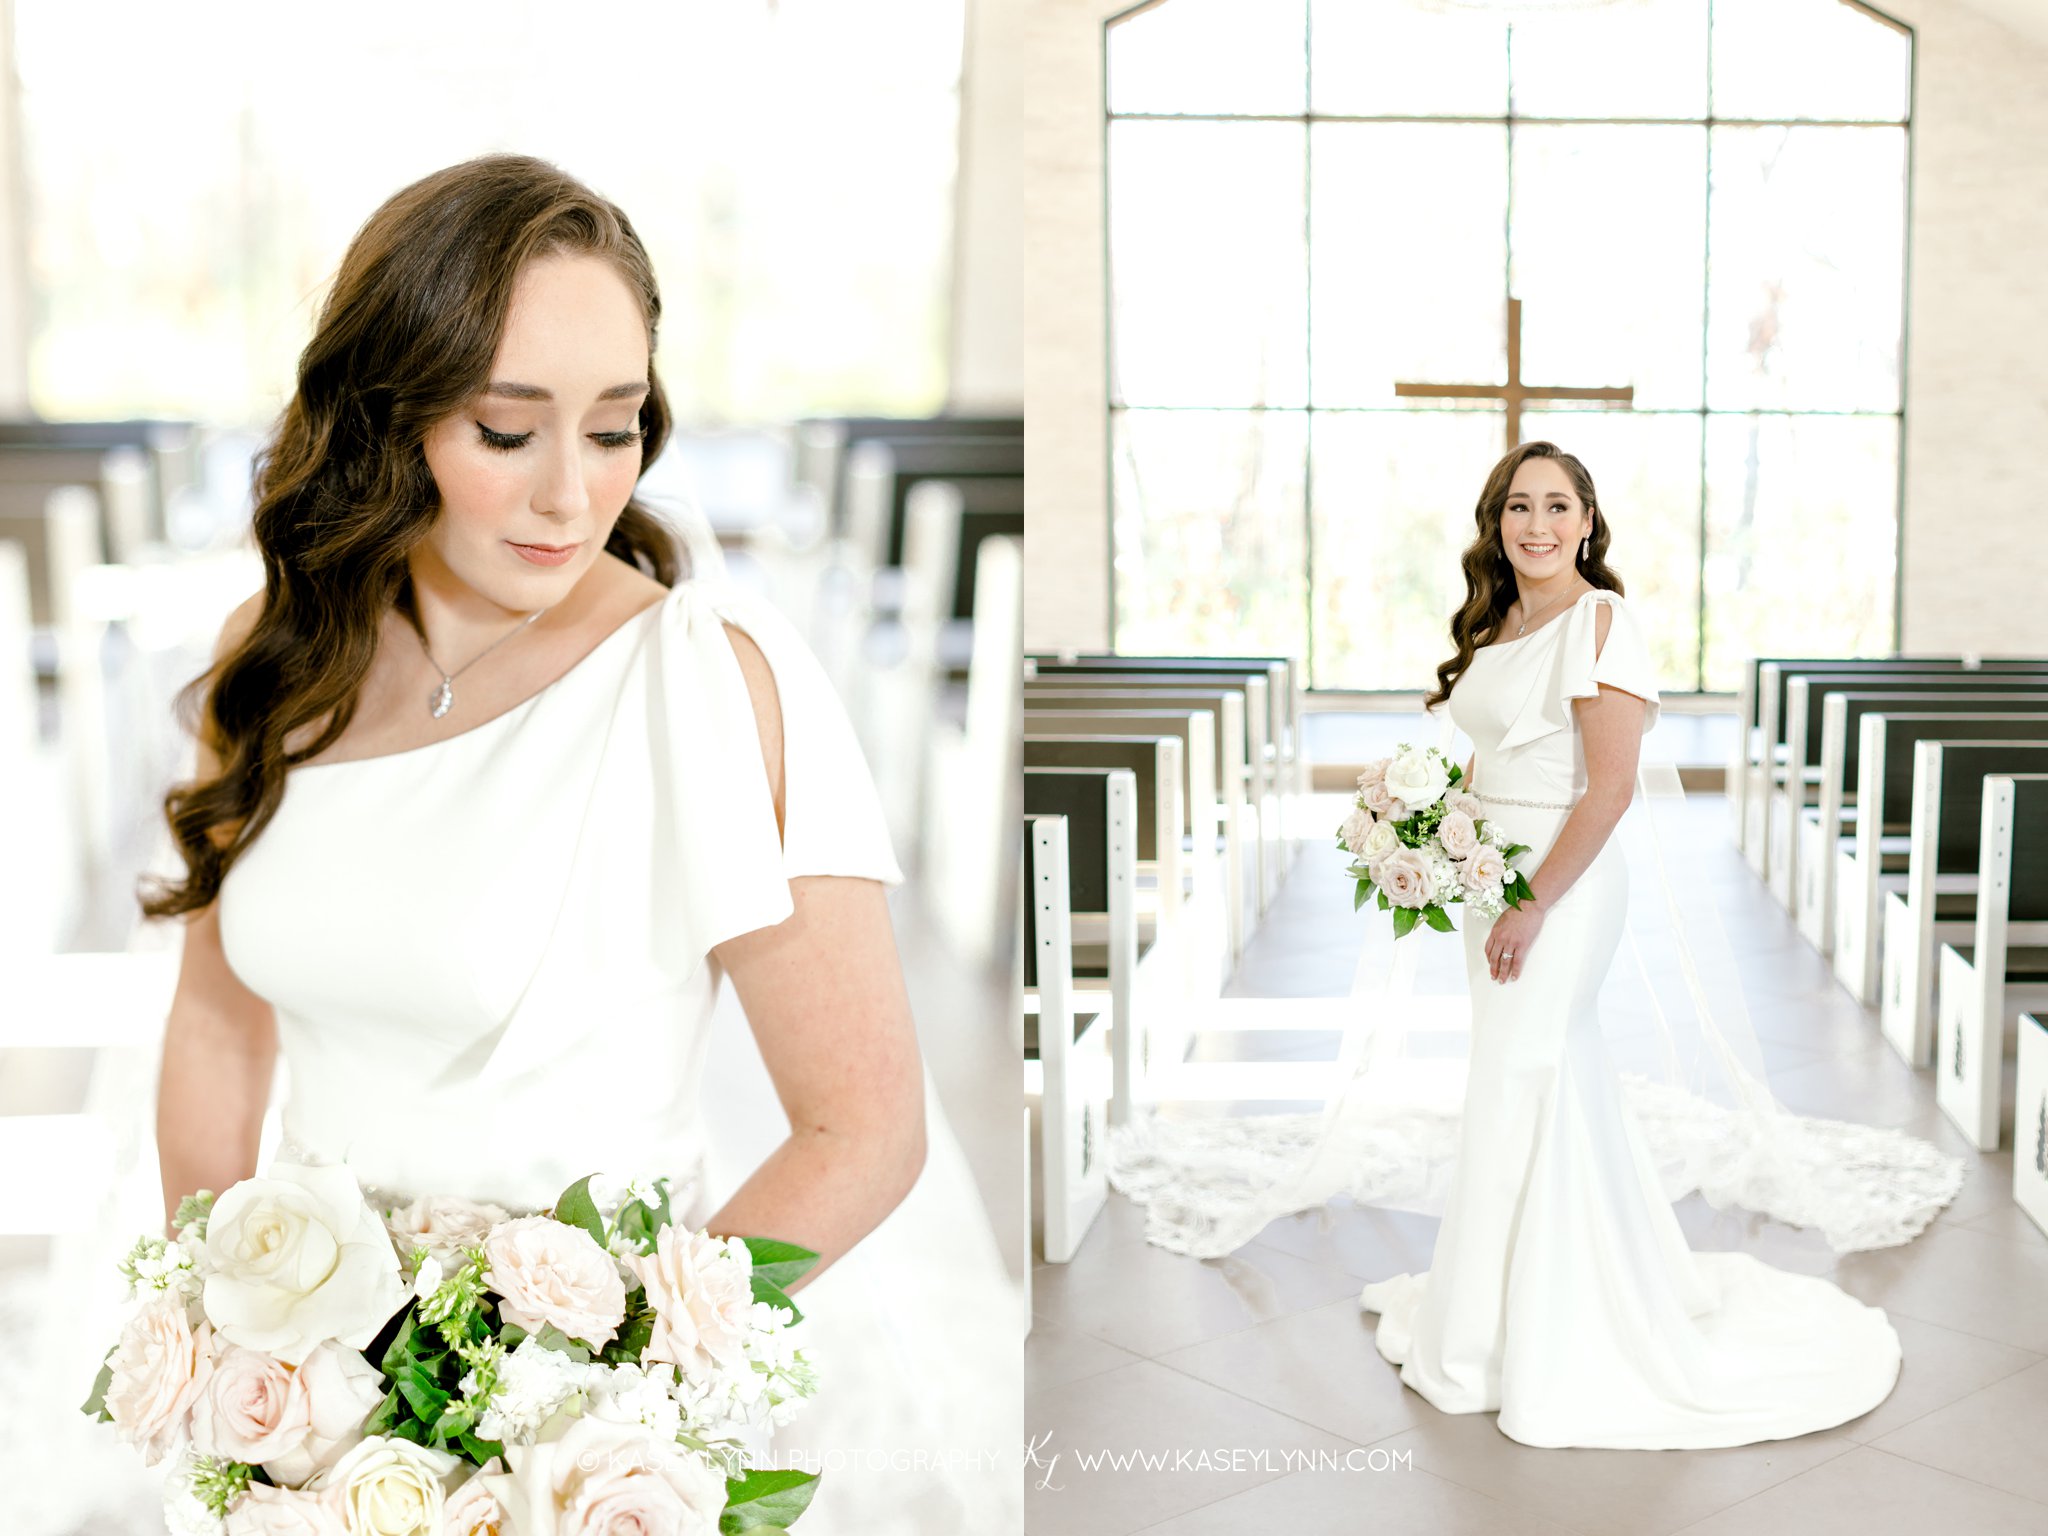 The Luminaire Wedding Photographer / Kasey Lynn Photography